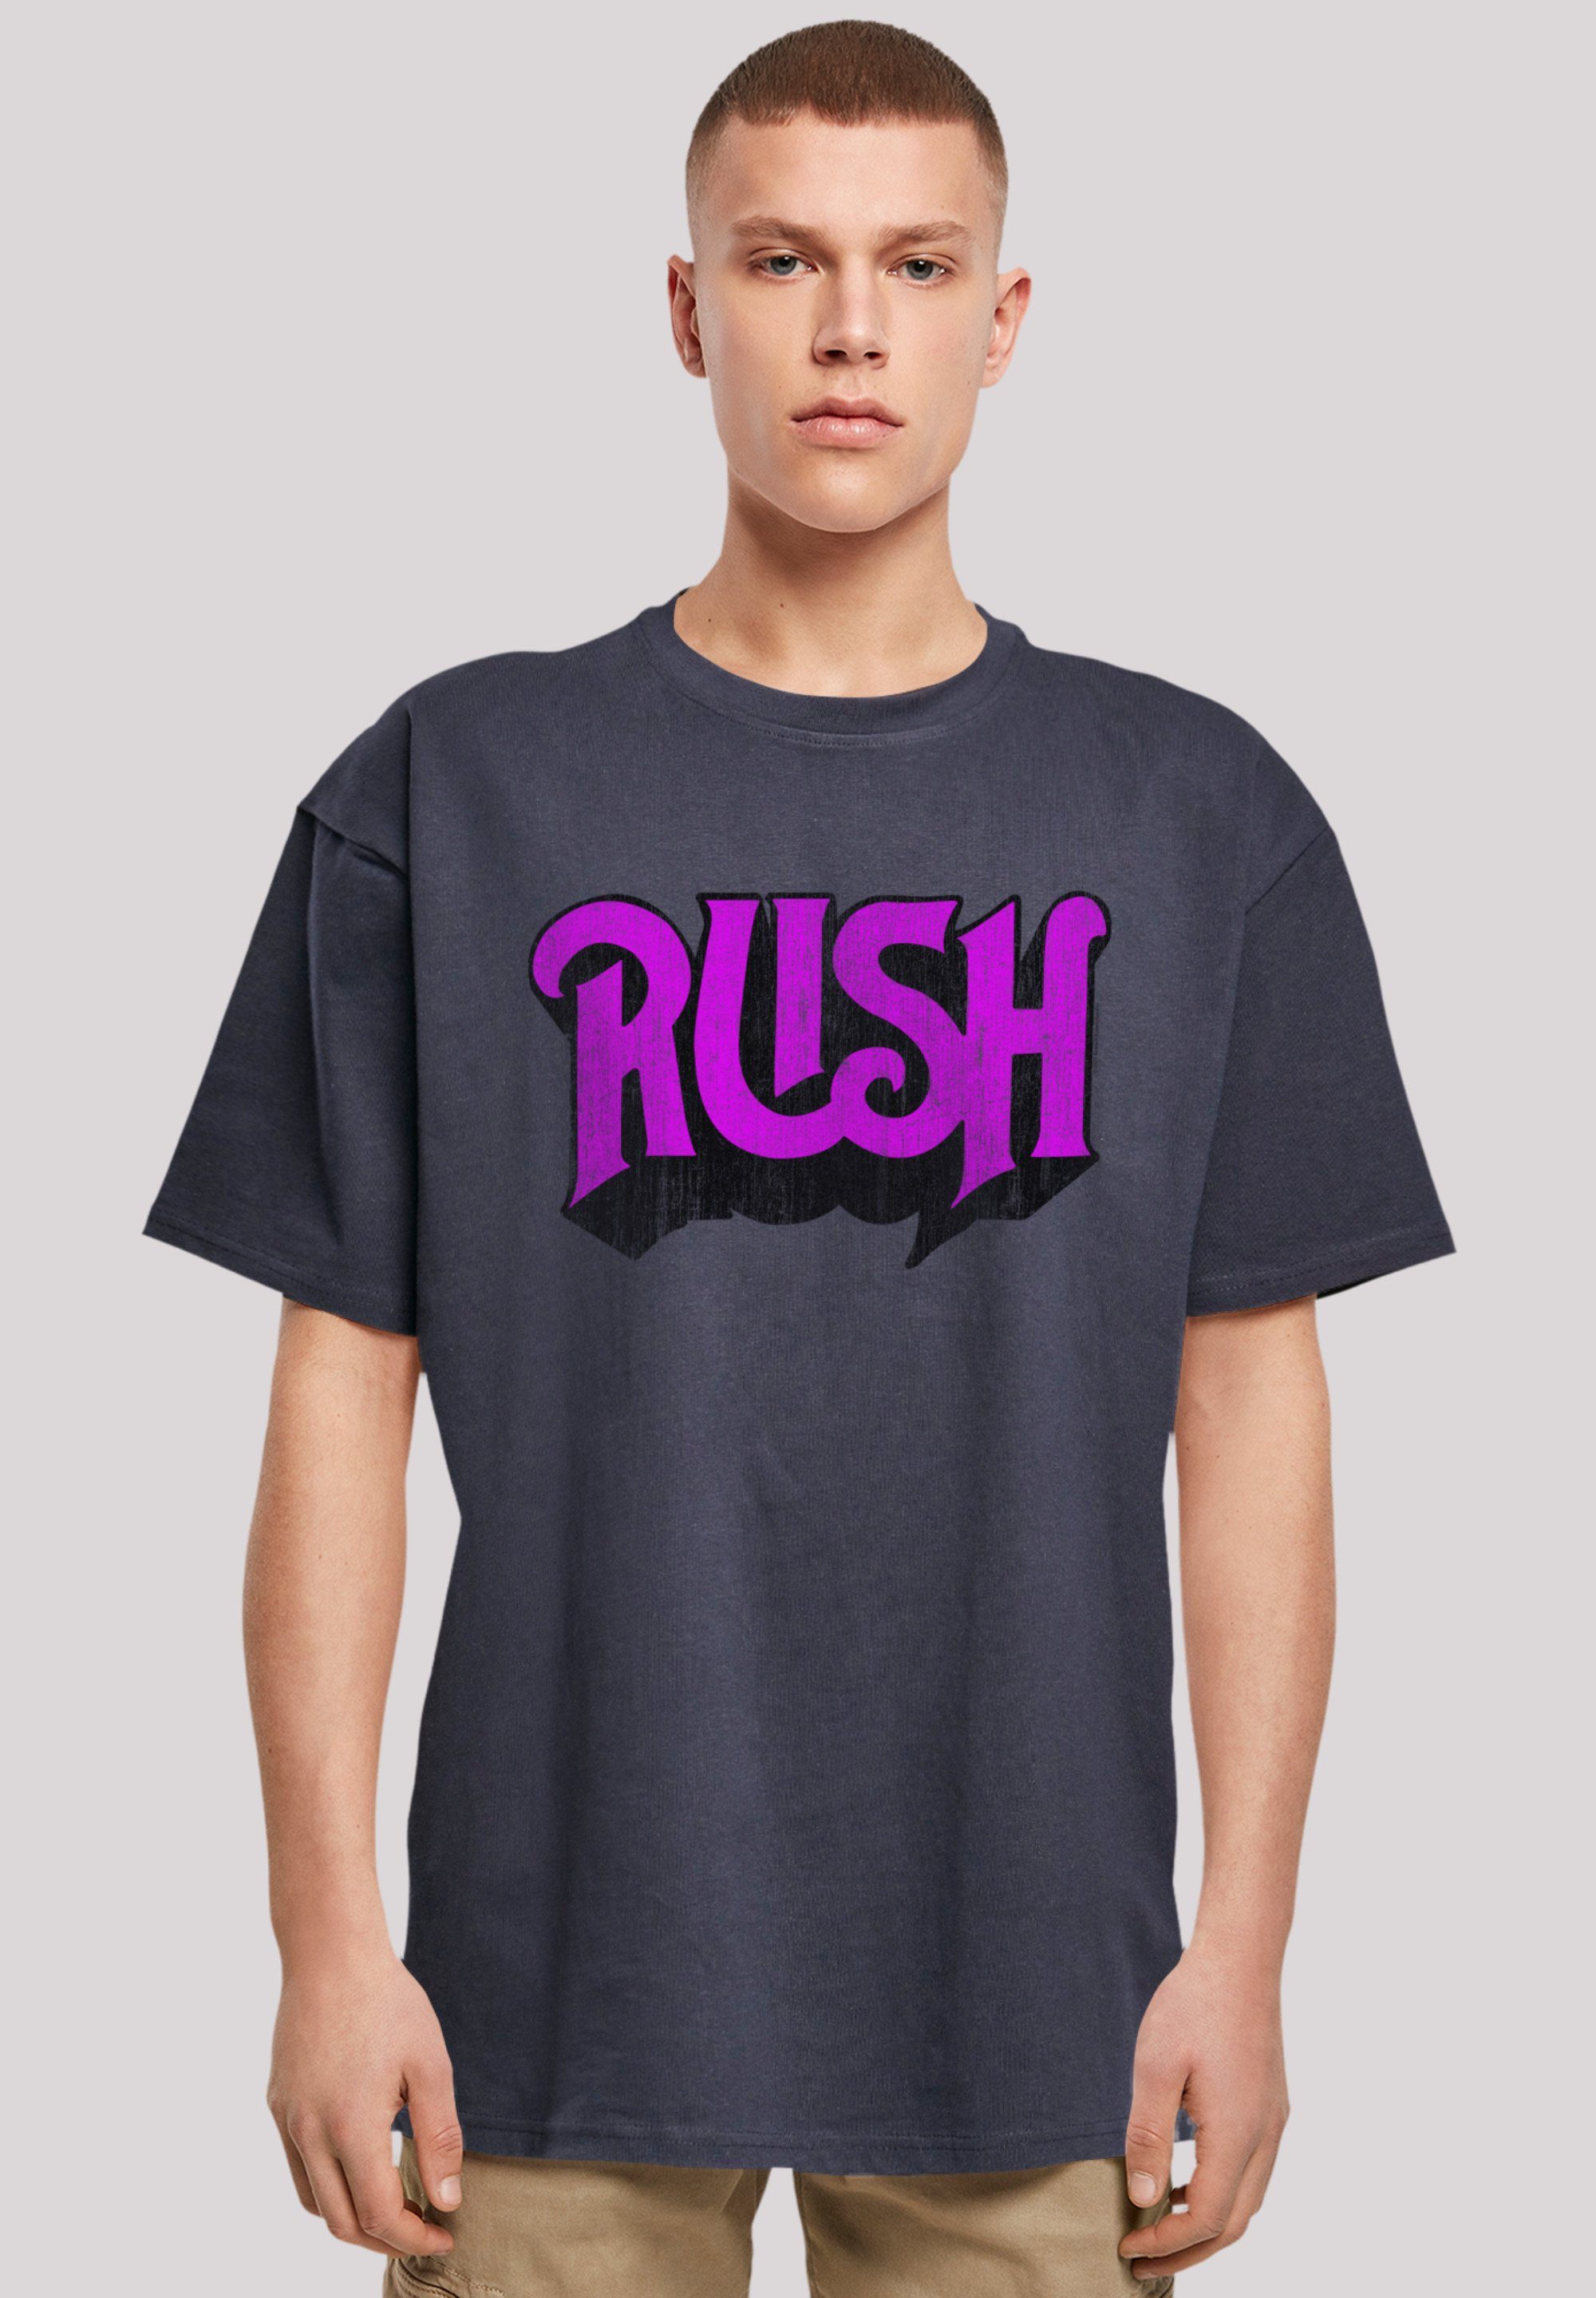 F4NT4STIC Band Logo T-Shirt Rush Qualität navy Rock Premium Distressed